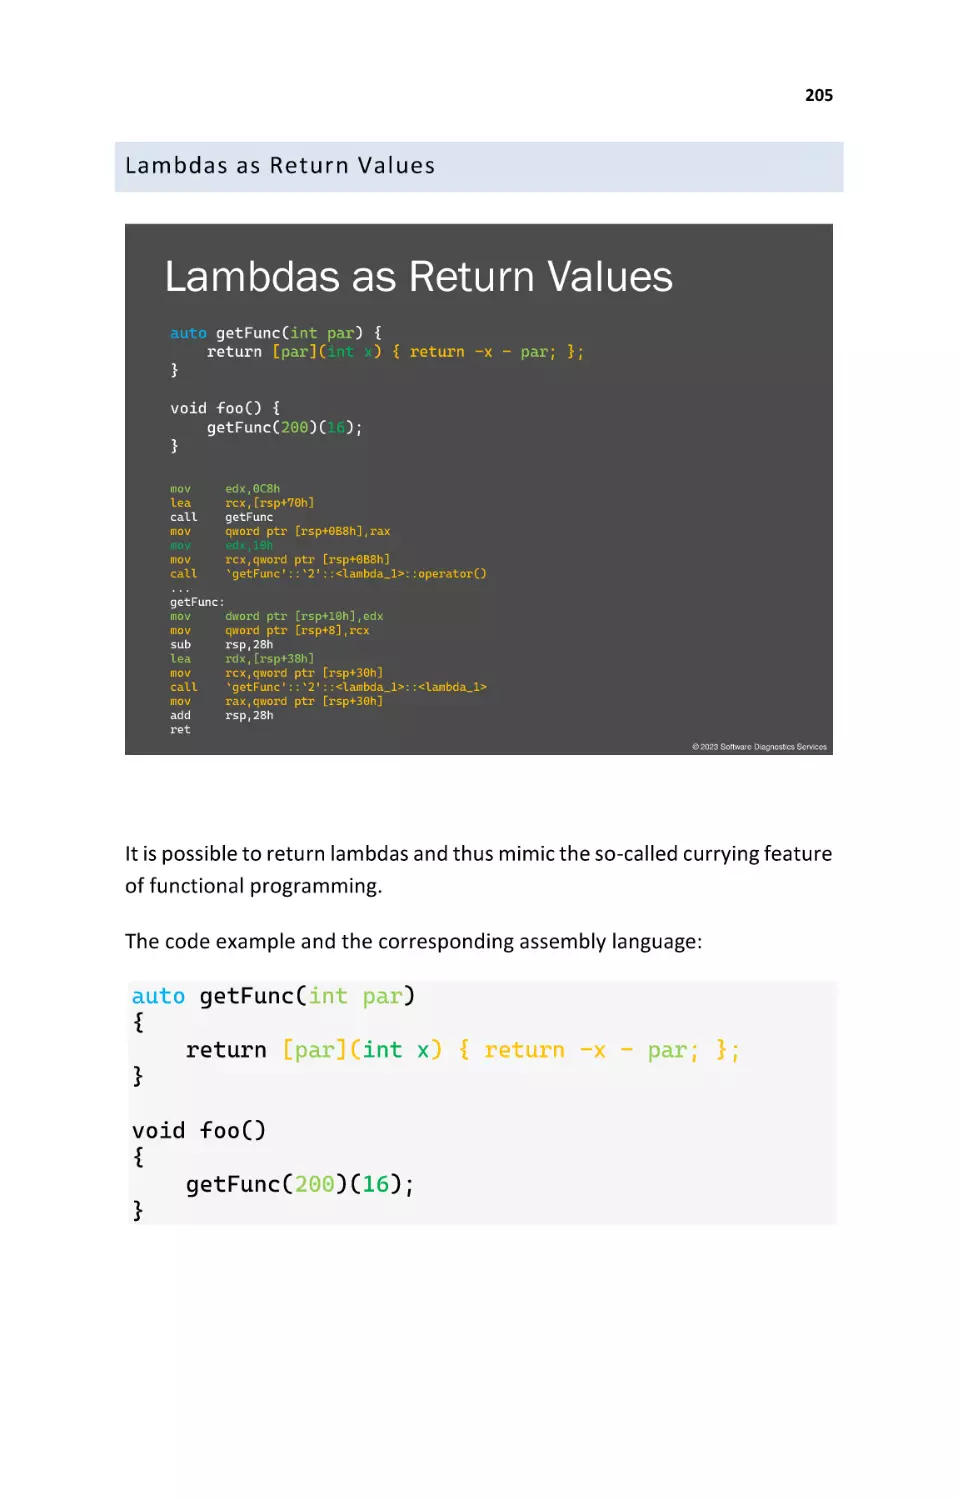 Lambdas as Return Values